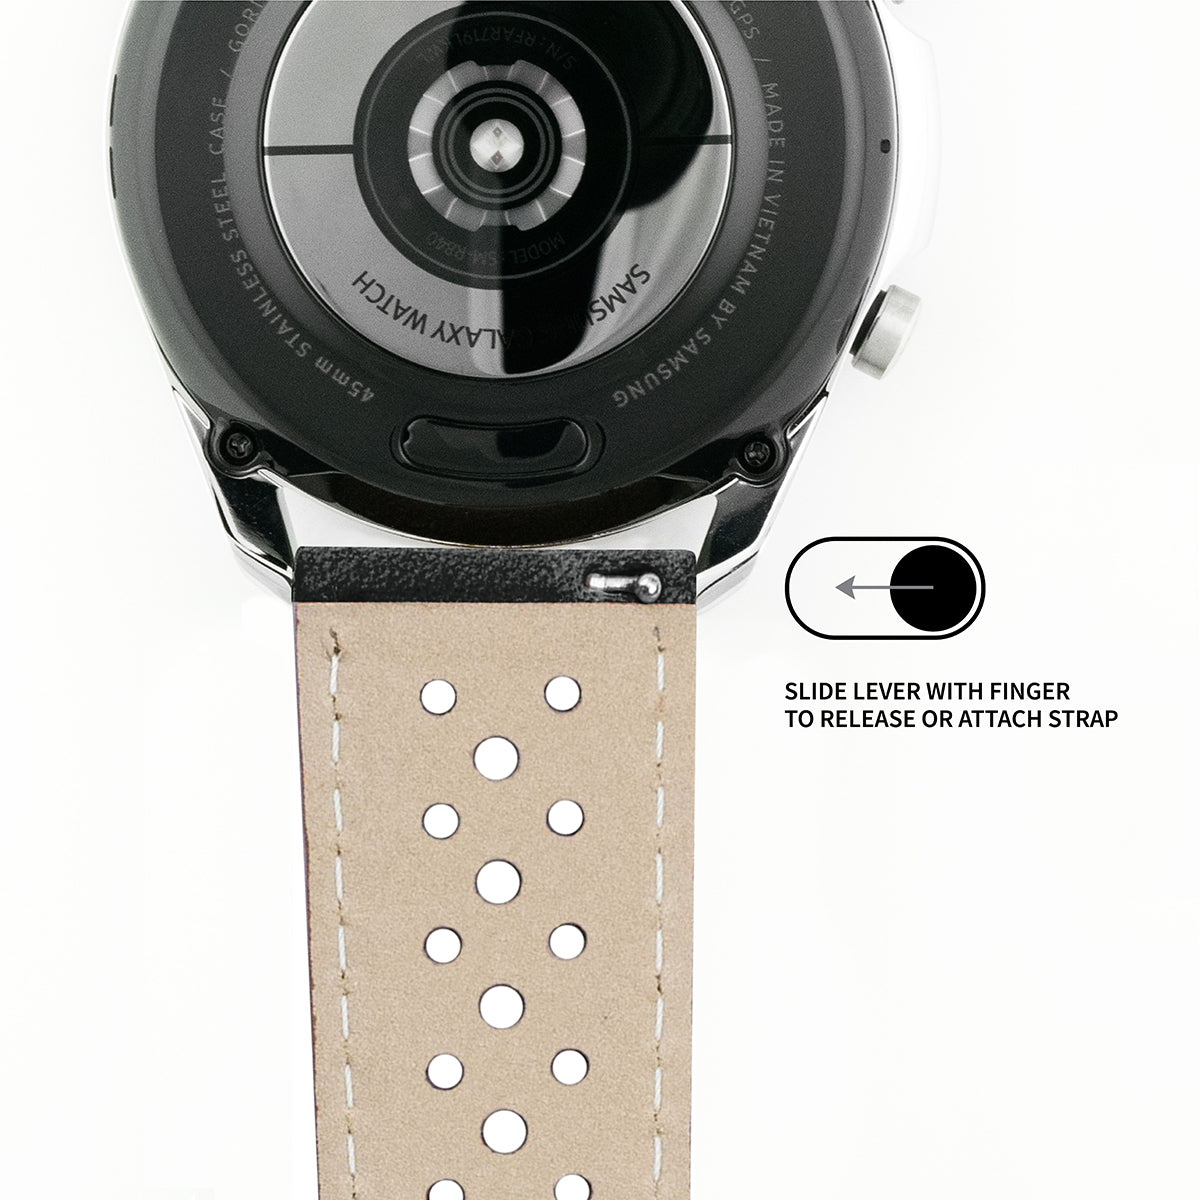 Samsung Galaxy Watch5 Racing Horween Leather Black Blue Stitch Watch Band